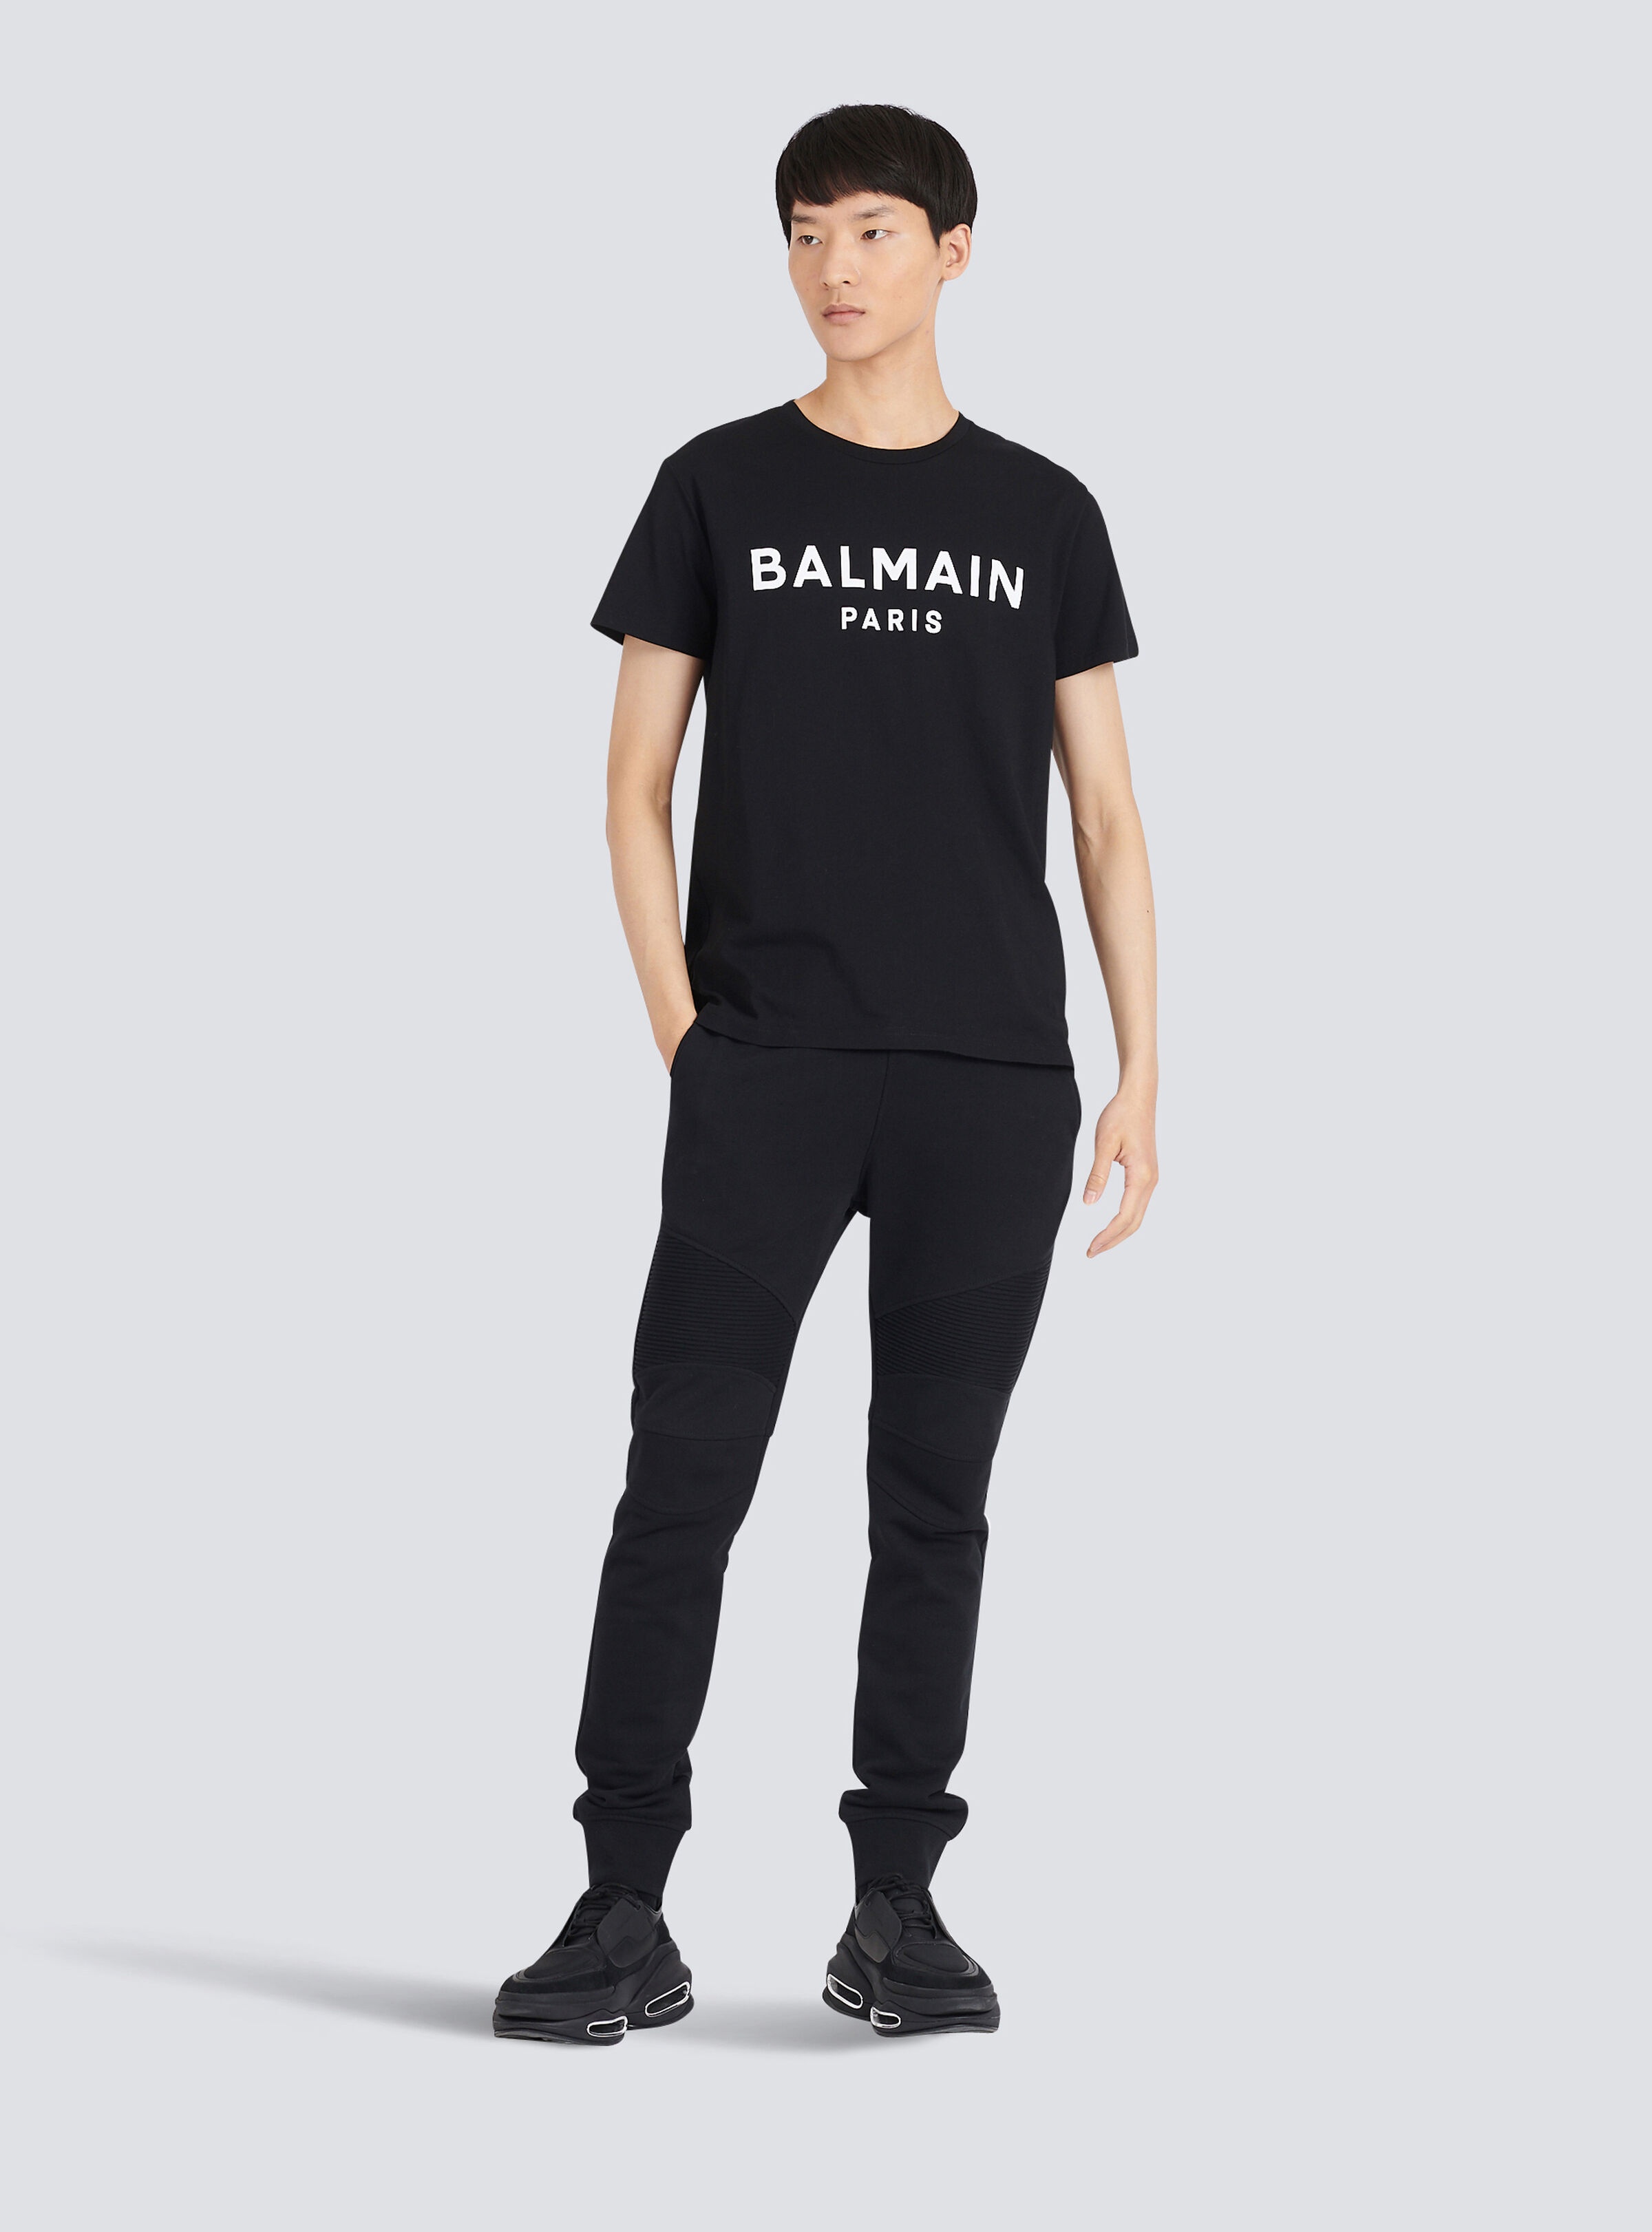 Eco-designed cotton T-shirt with Balmain Paris logo print - 2